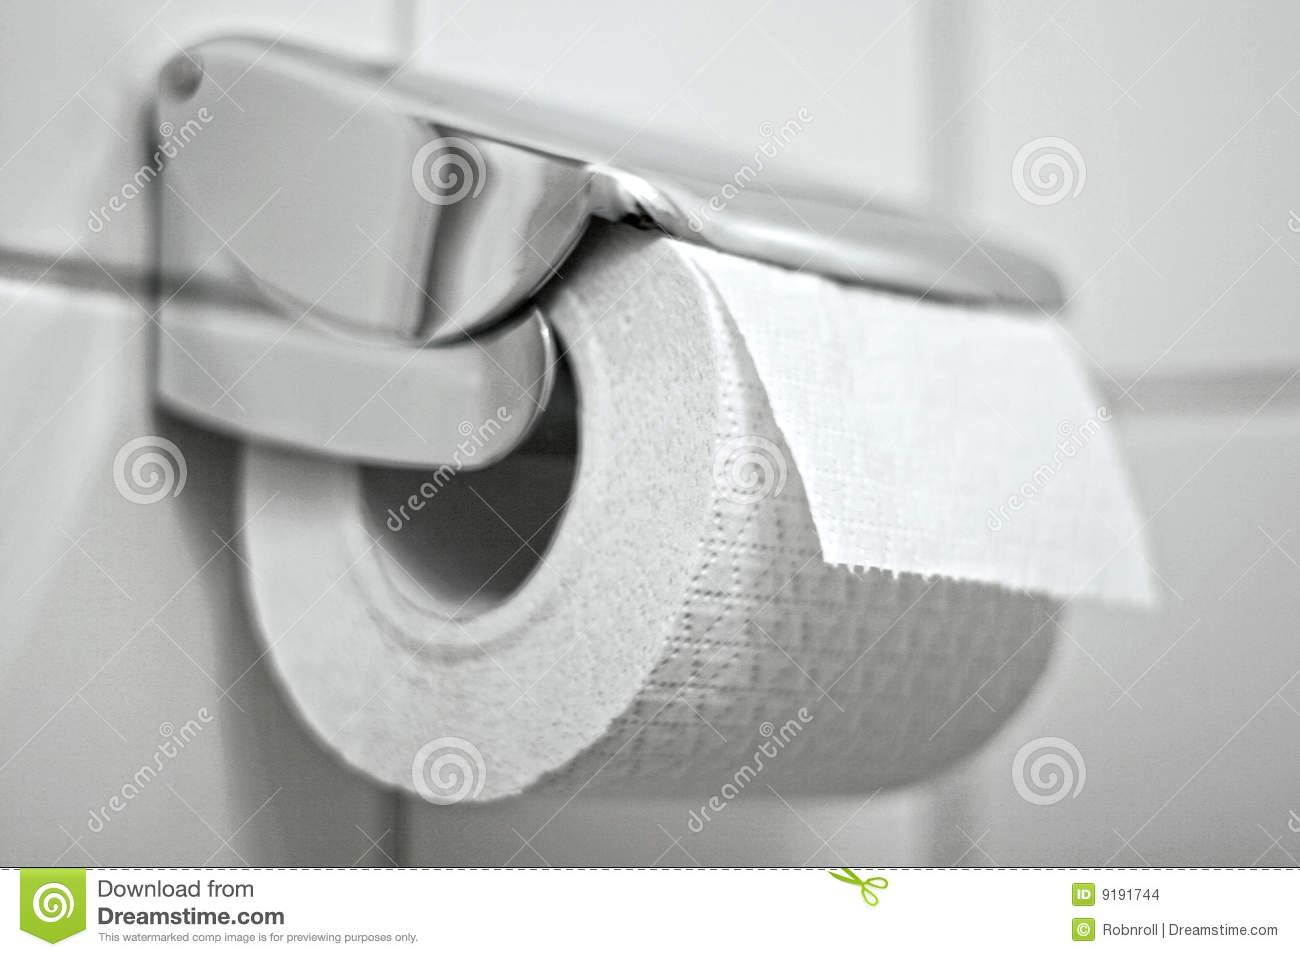 toiletpaper